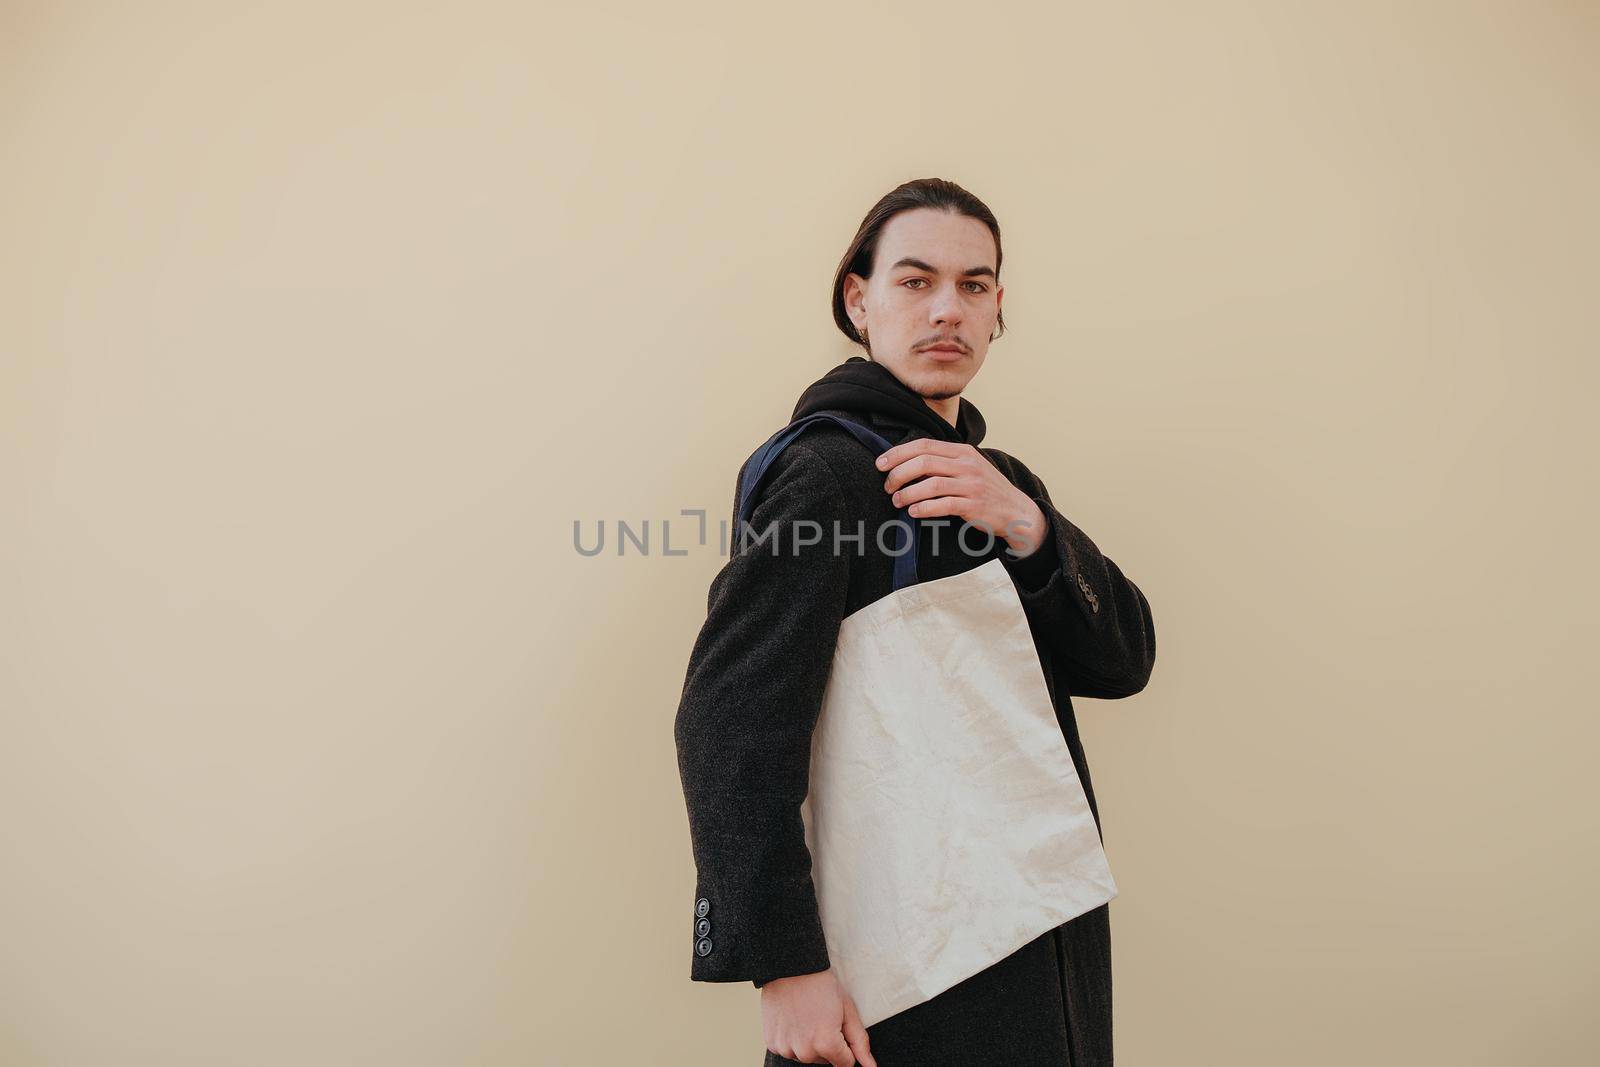 Young man holding textile bag on color background, closeup. Mockup for design hipster